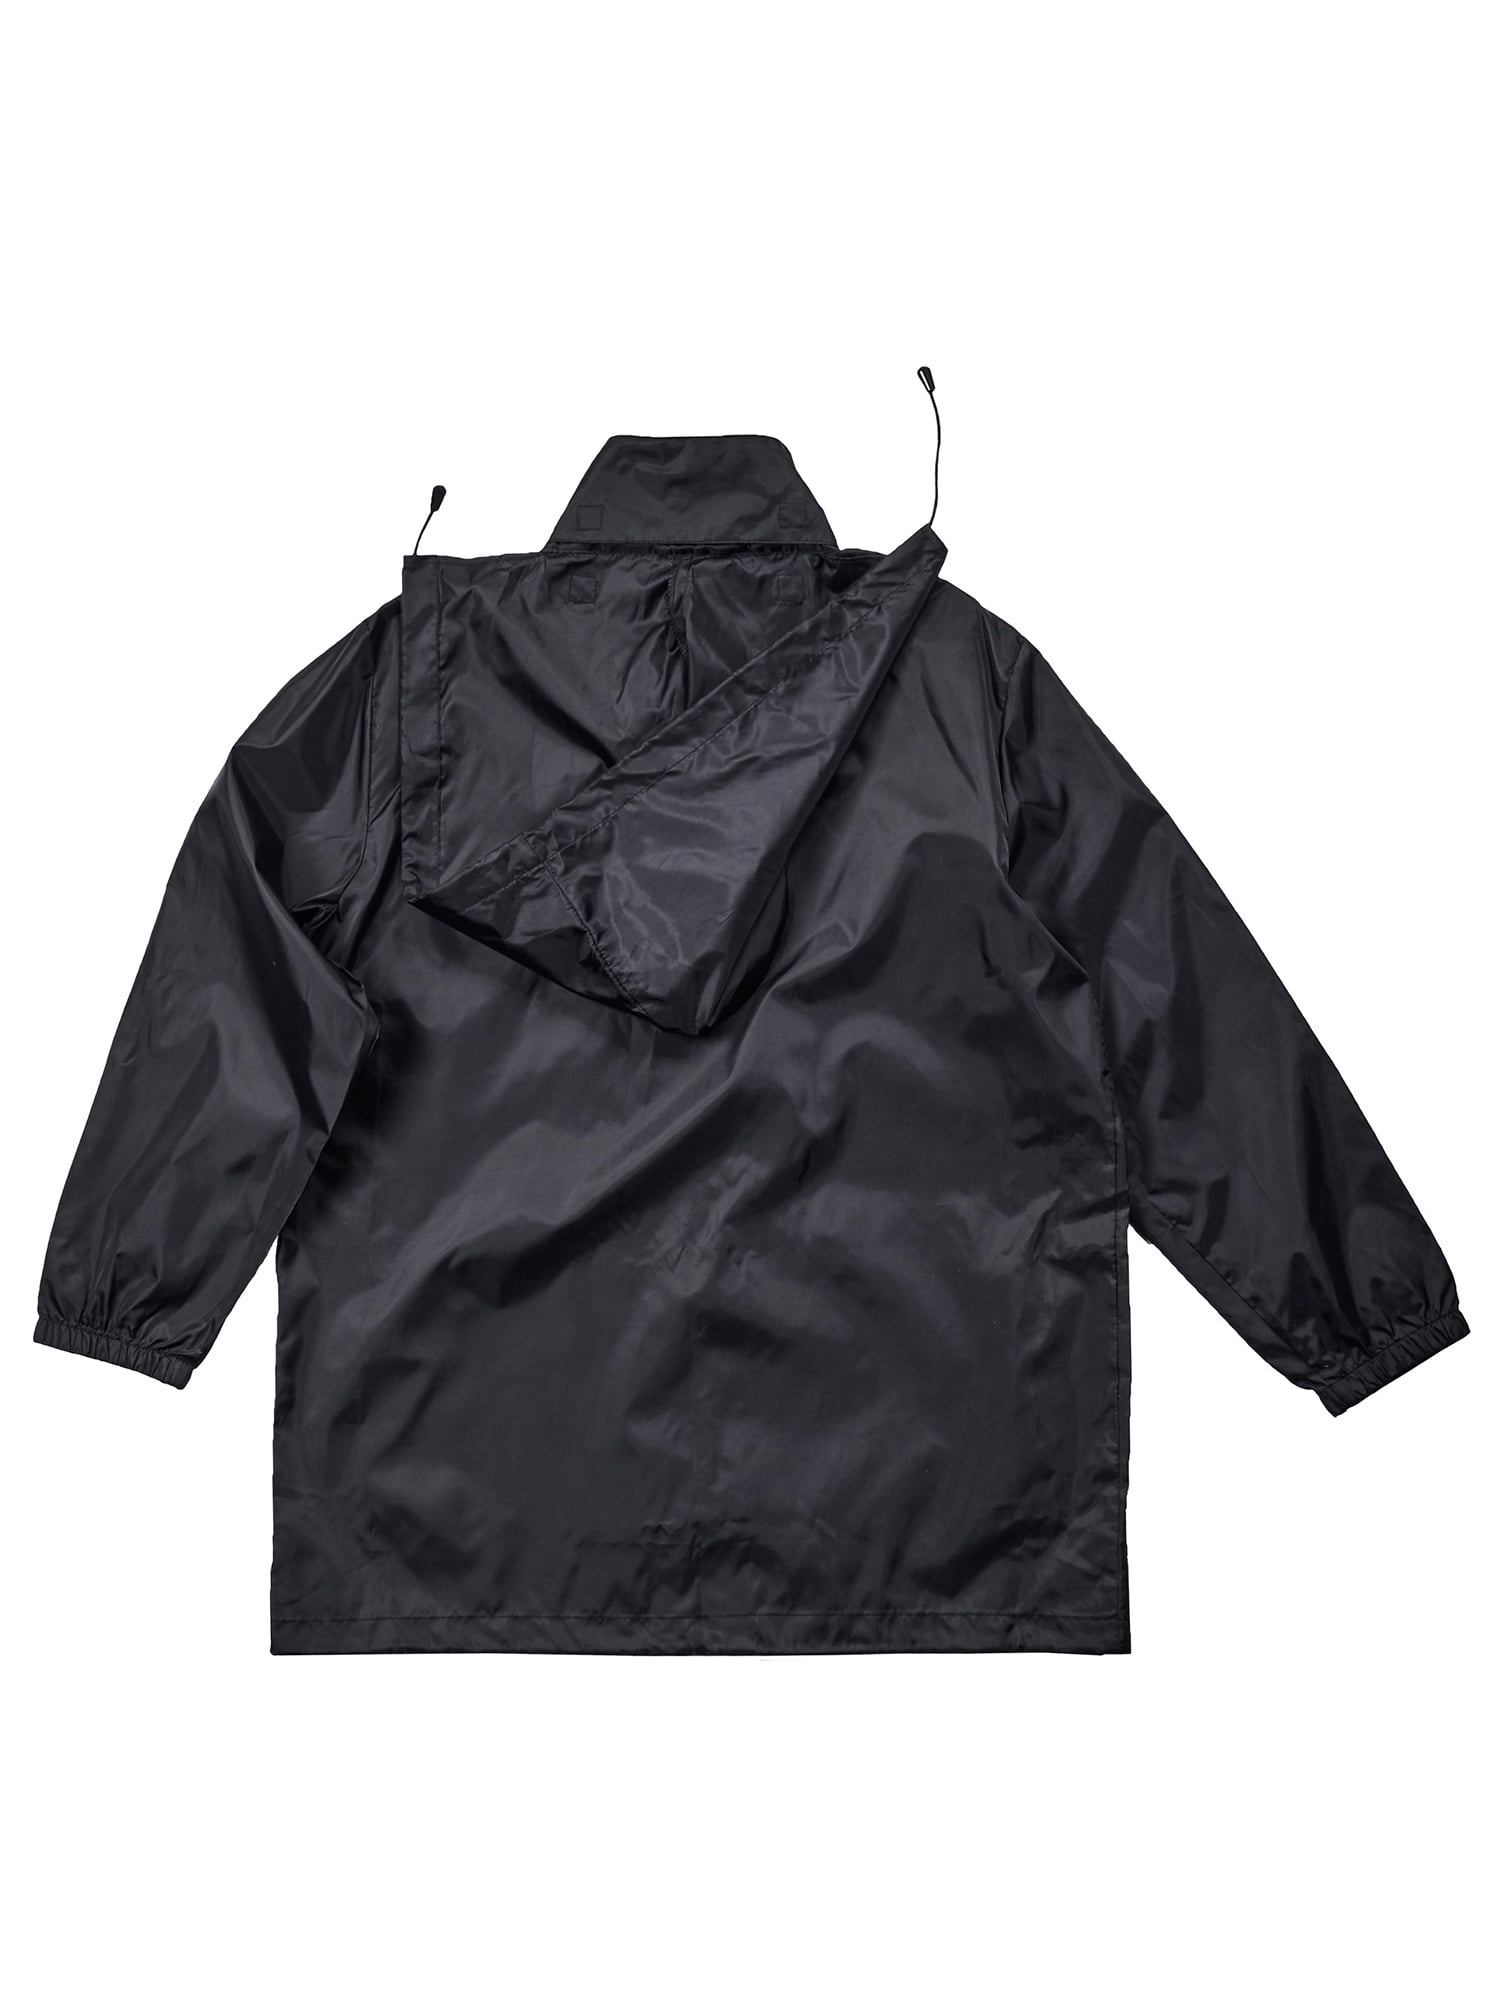 totes packable anorak rain jacket